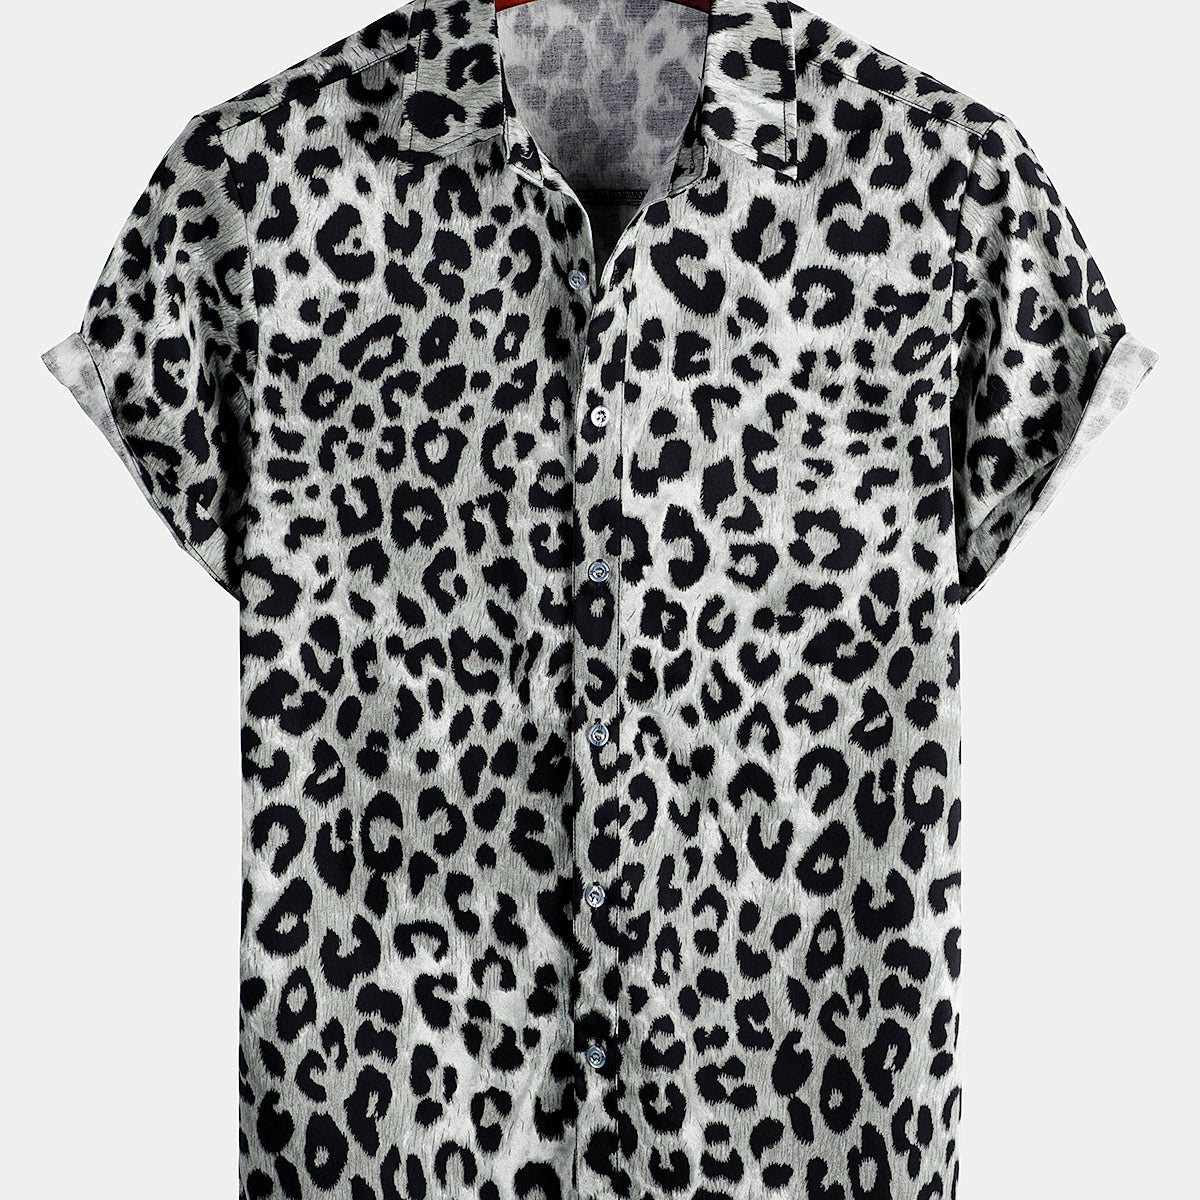 Men's Cotton Casual White Leopard Animal Print Cheetah Rock Button Up ...